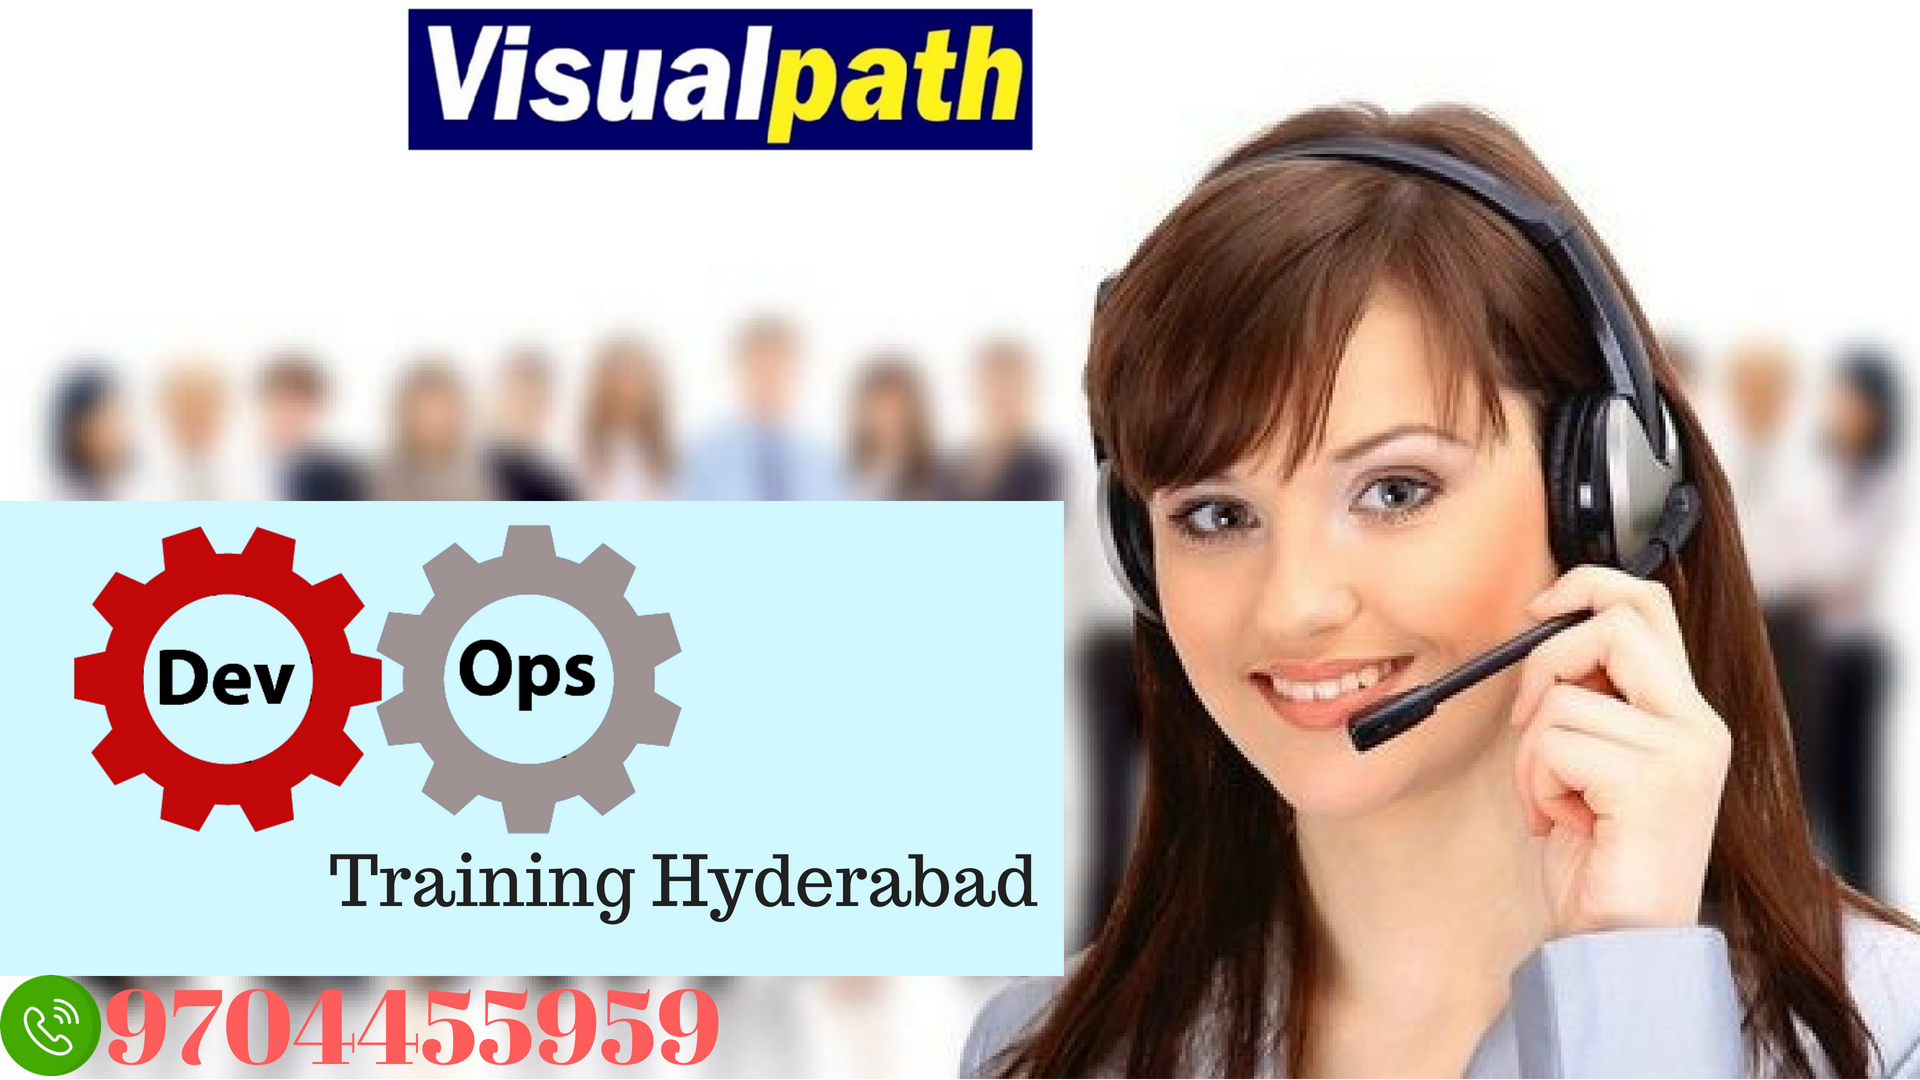 DevOps Training Online | DevOps Training in Ameerpet, Hyderabad, Andhra Pradesh, India